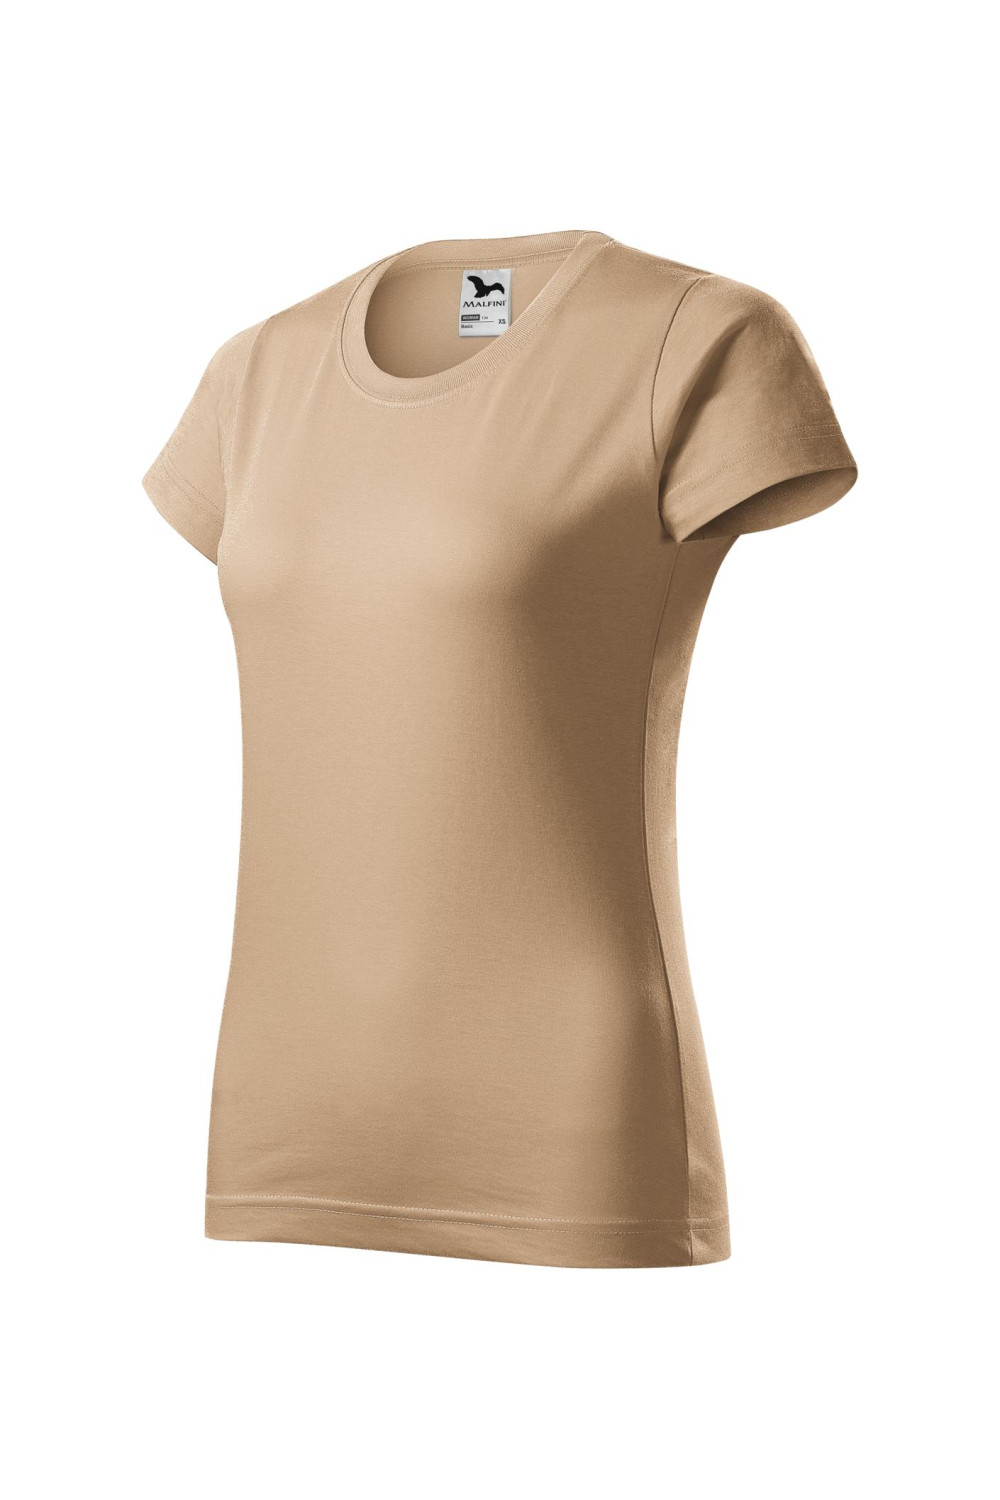 BASIC 134 MALFINI Koszulka damska 100% bawełna t-shirt piaskowy